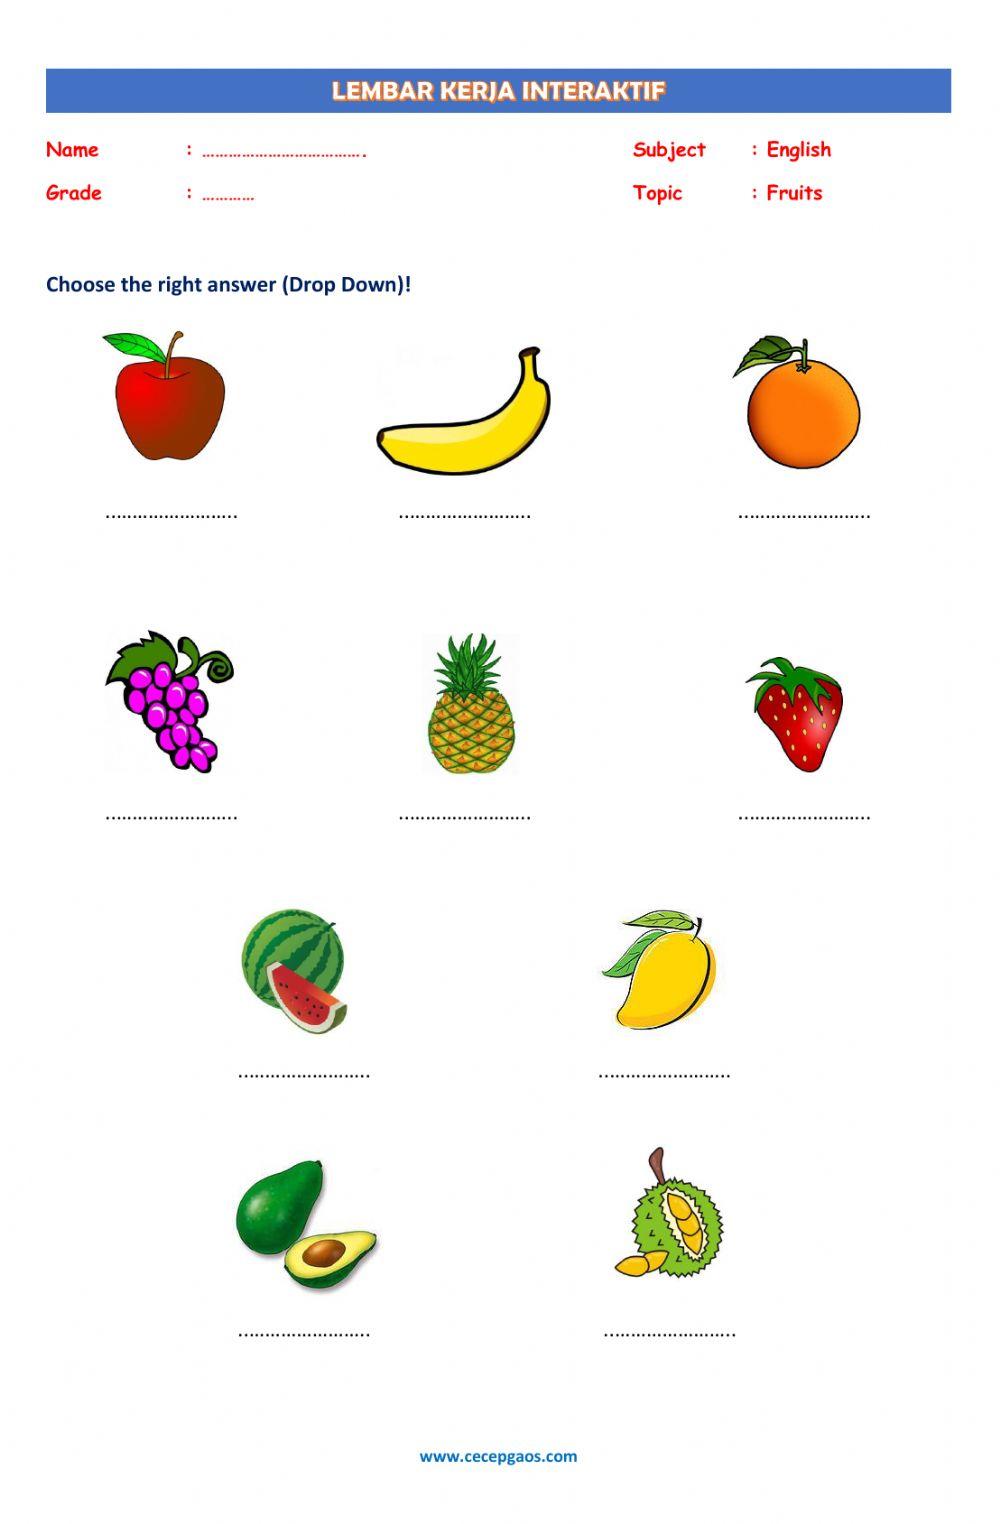 LKS Interaktif tentang Fruits